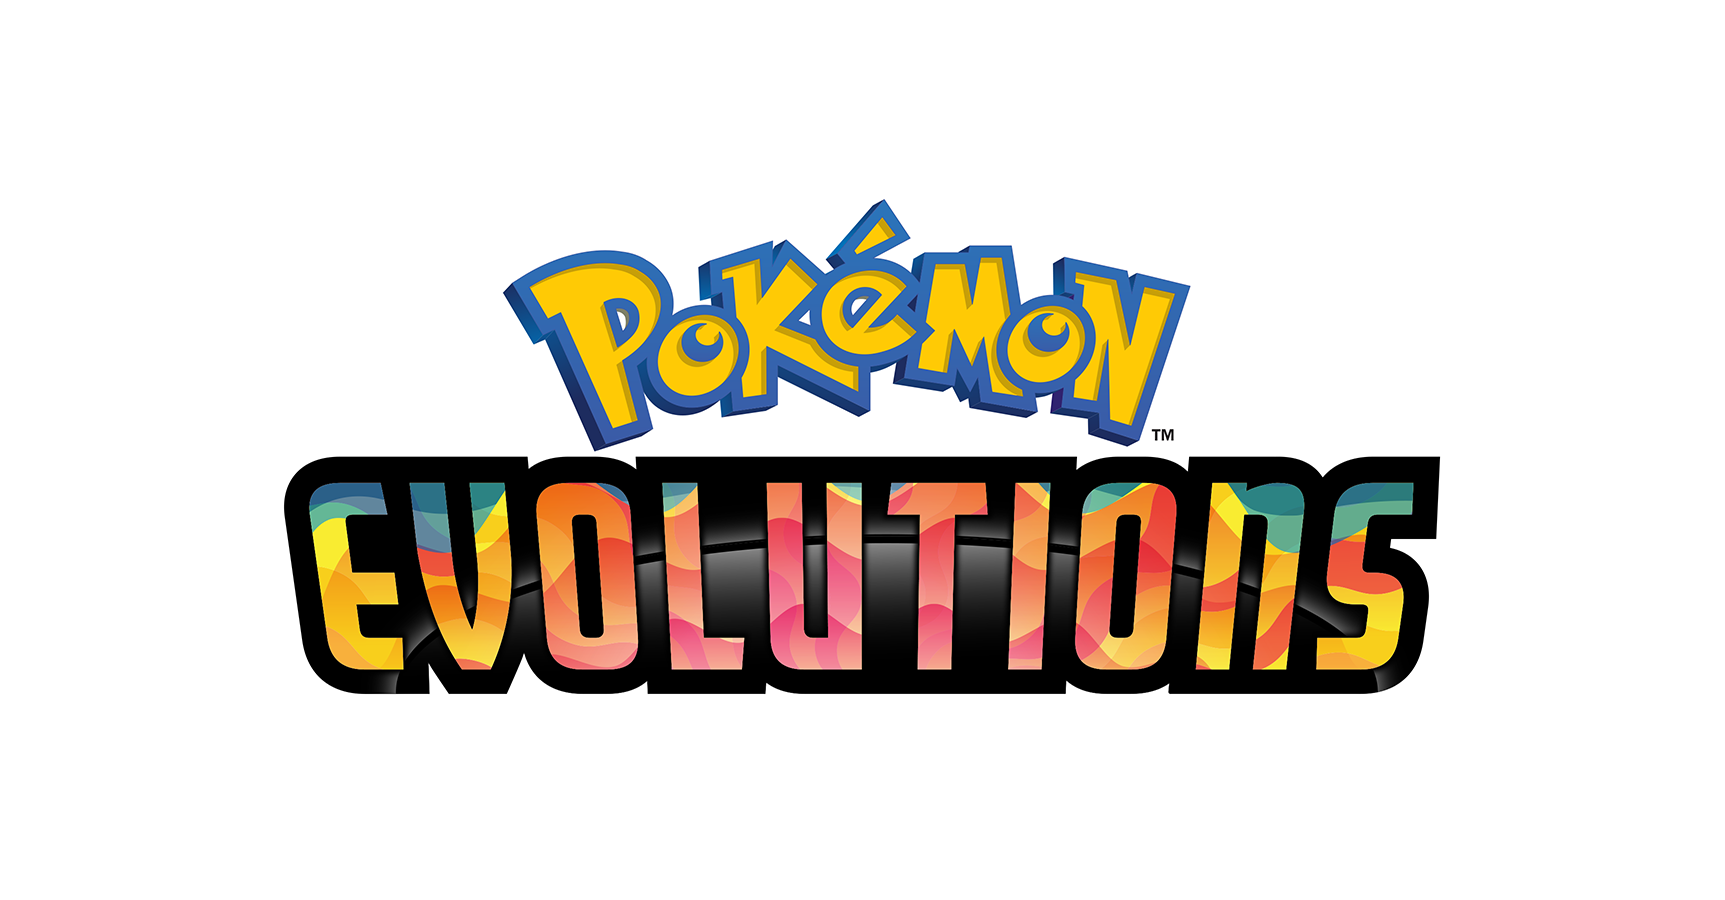 Pokémon Evolutions logo.png